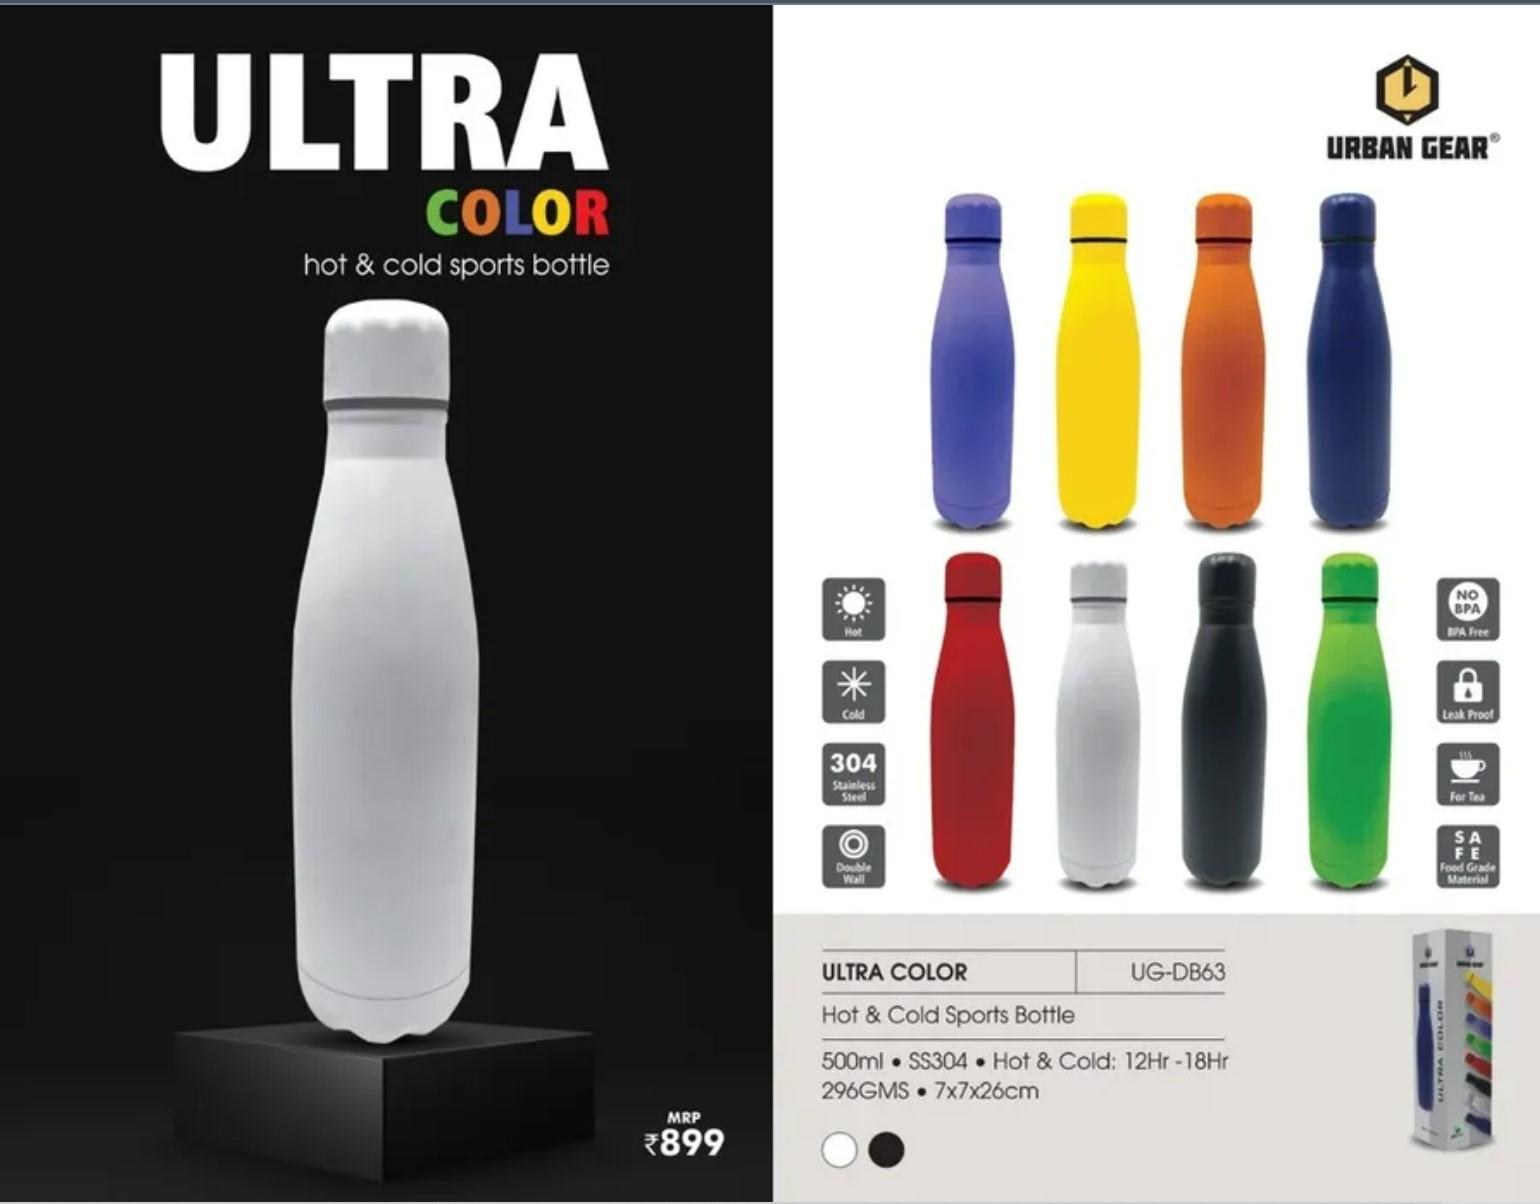 ULTRA COLOR Hot & Cold Sports Bottle